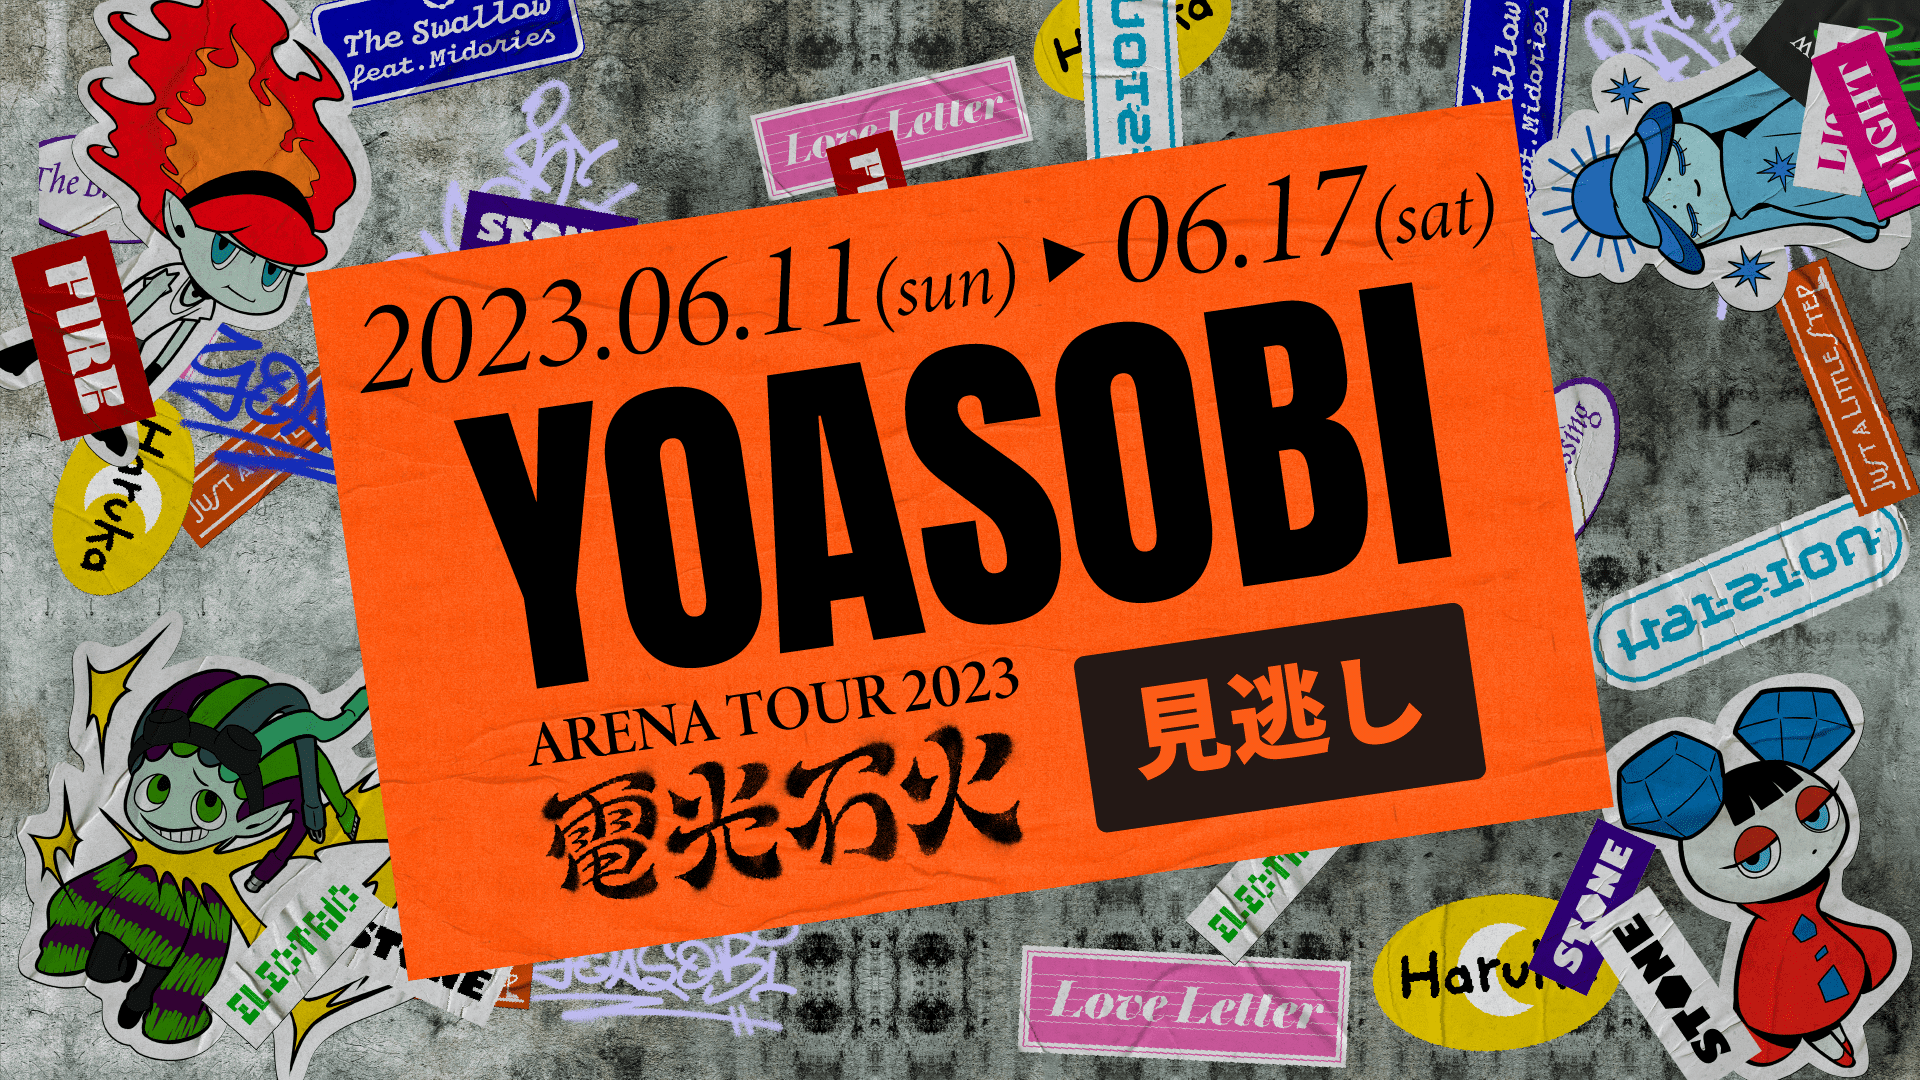 YOASOBI ARENA TOUR 2023 ”電光石火”